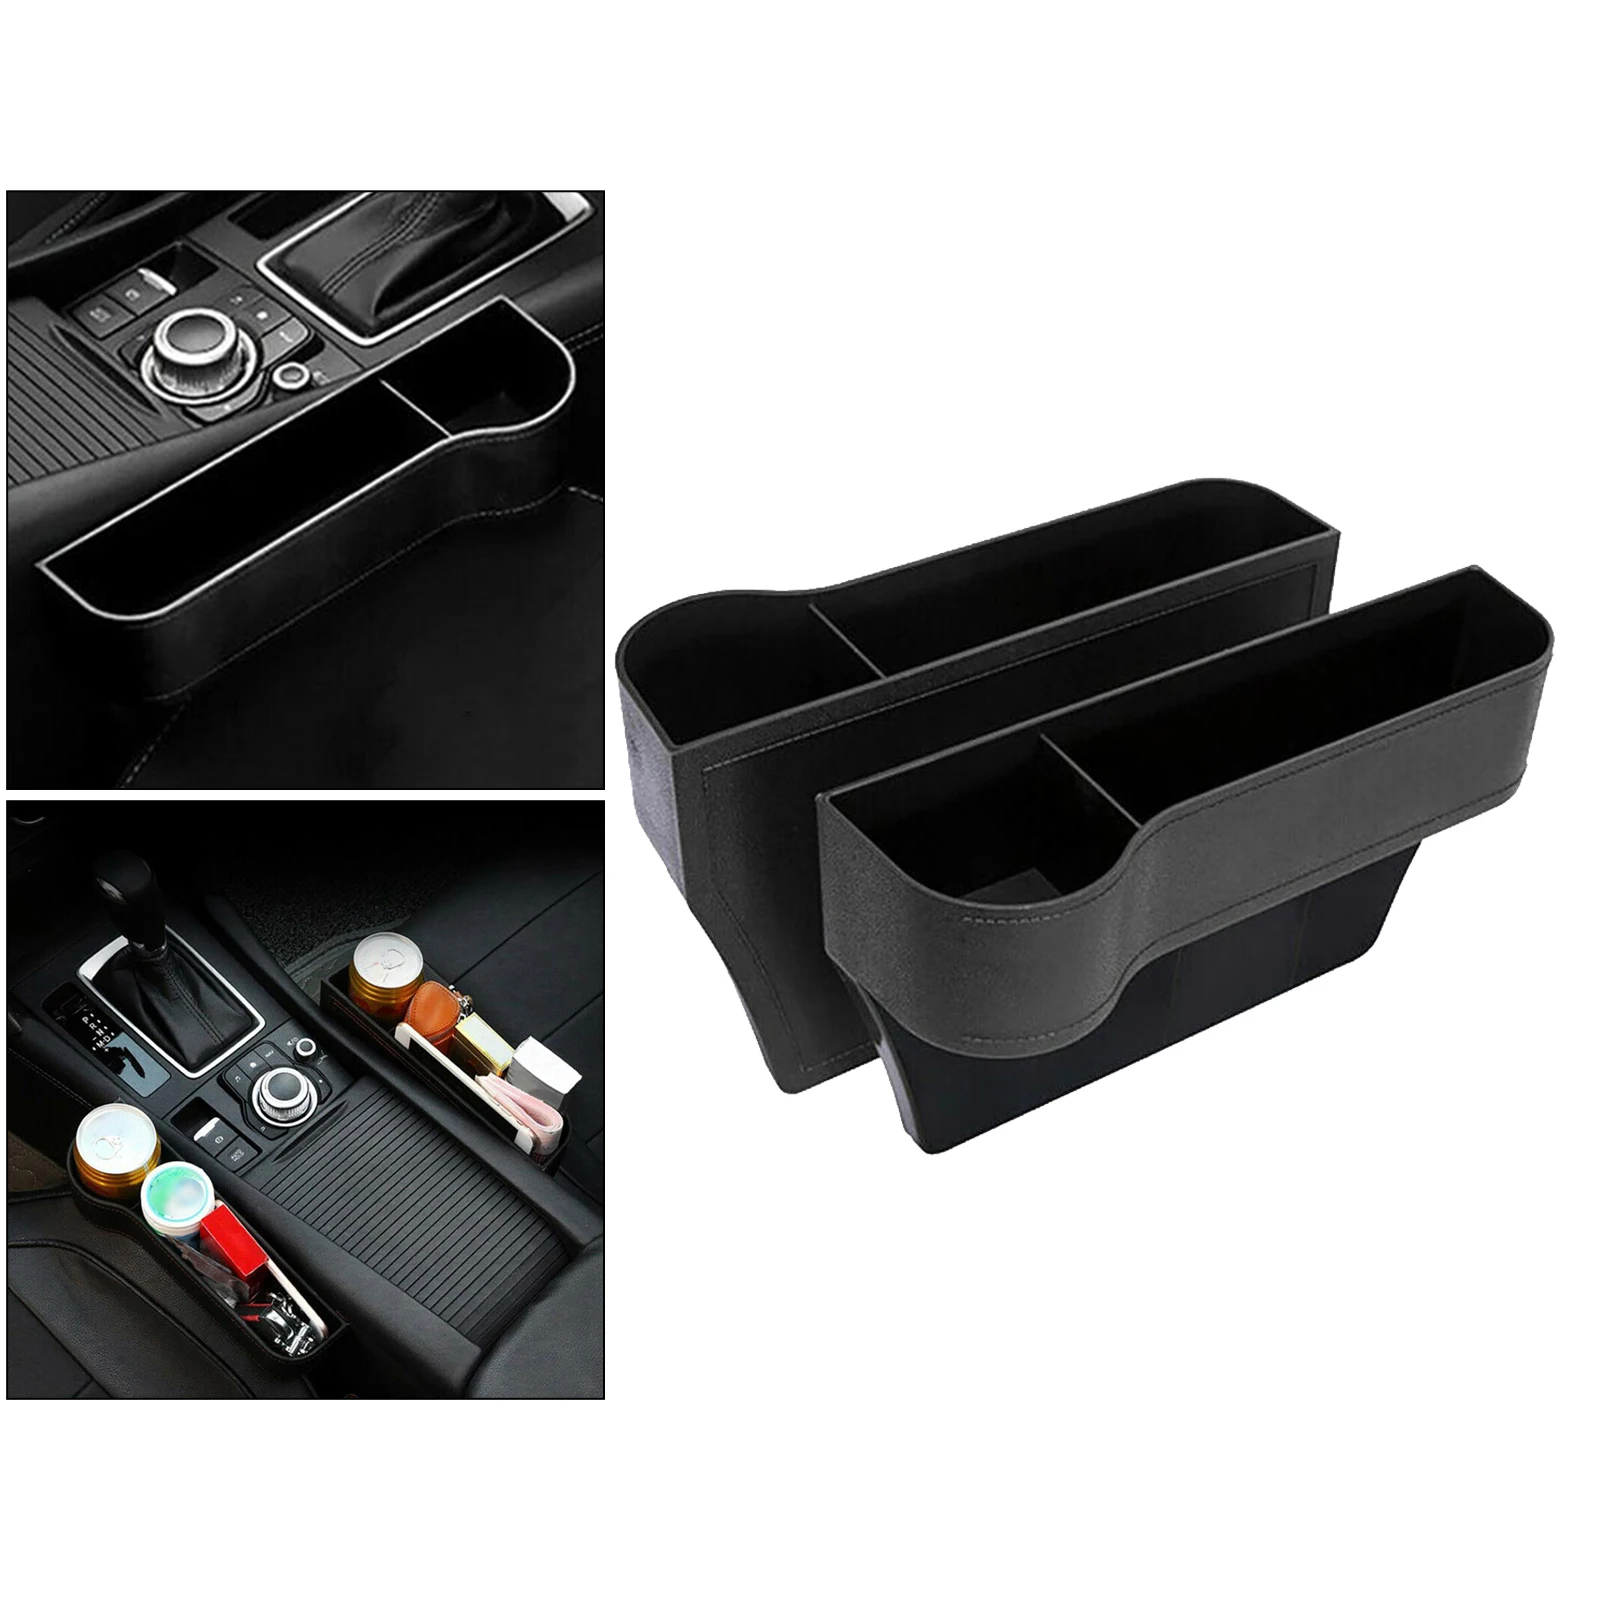 2x Car Seat Gap Catcher Filler Between Seats Organizer Storage Box Pocket for Cellphone Wallet Keys Cellphones Keys Cards Black